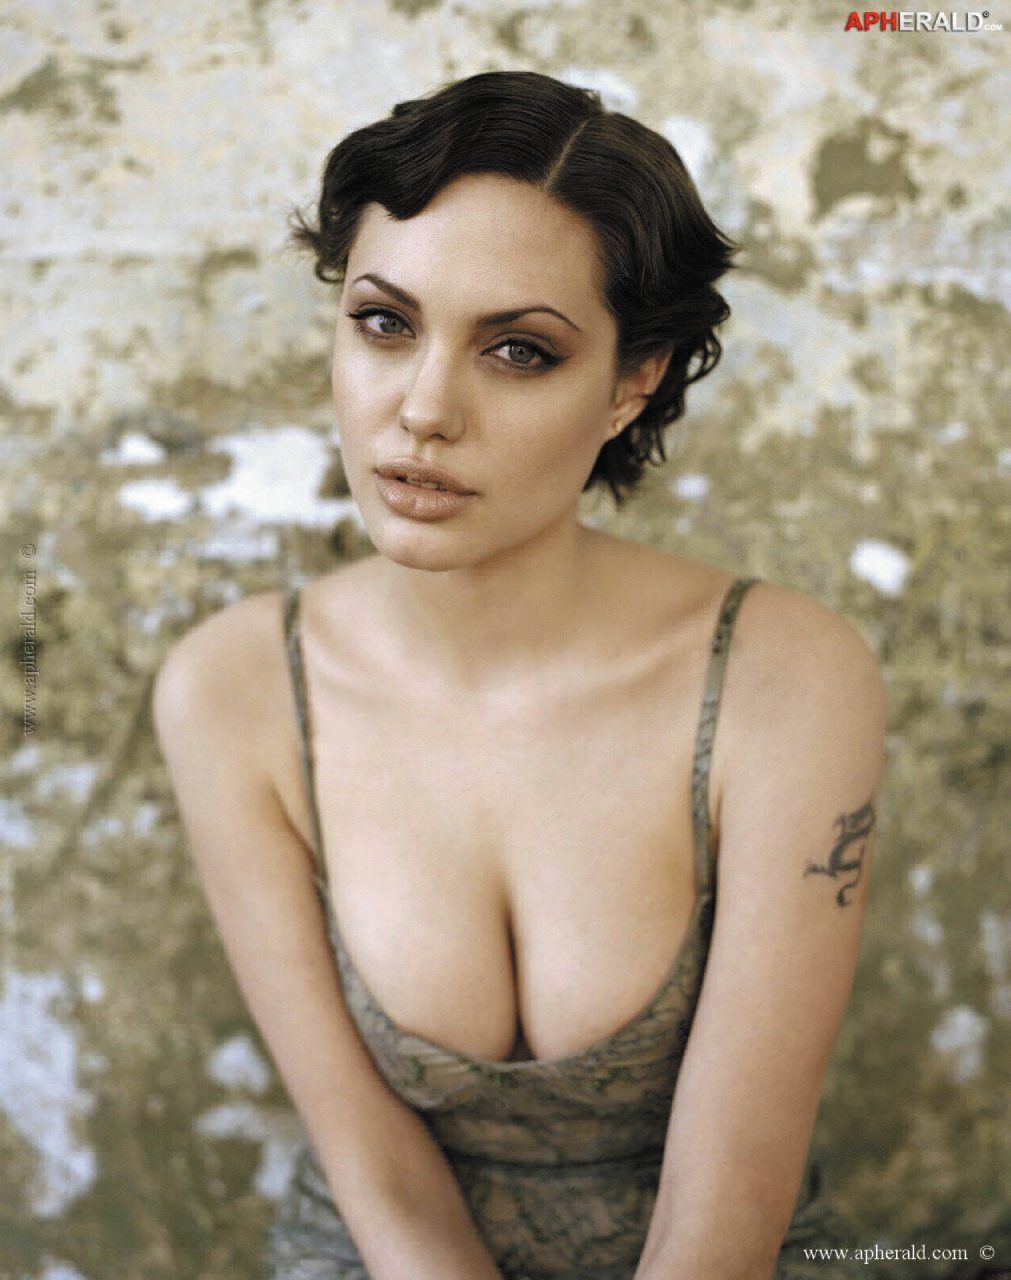 star polizze corpo sexy star assicurazioni celebrity Angelina Jolie